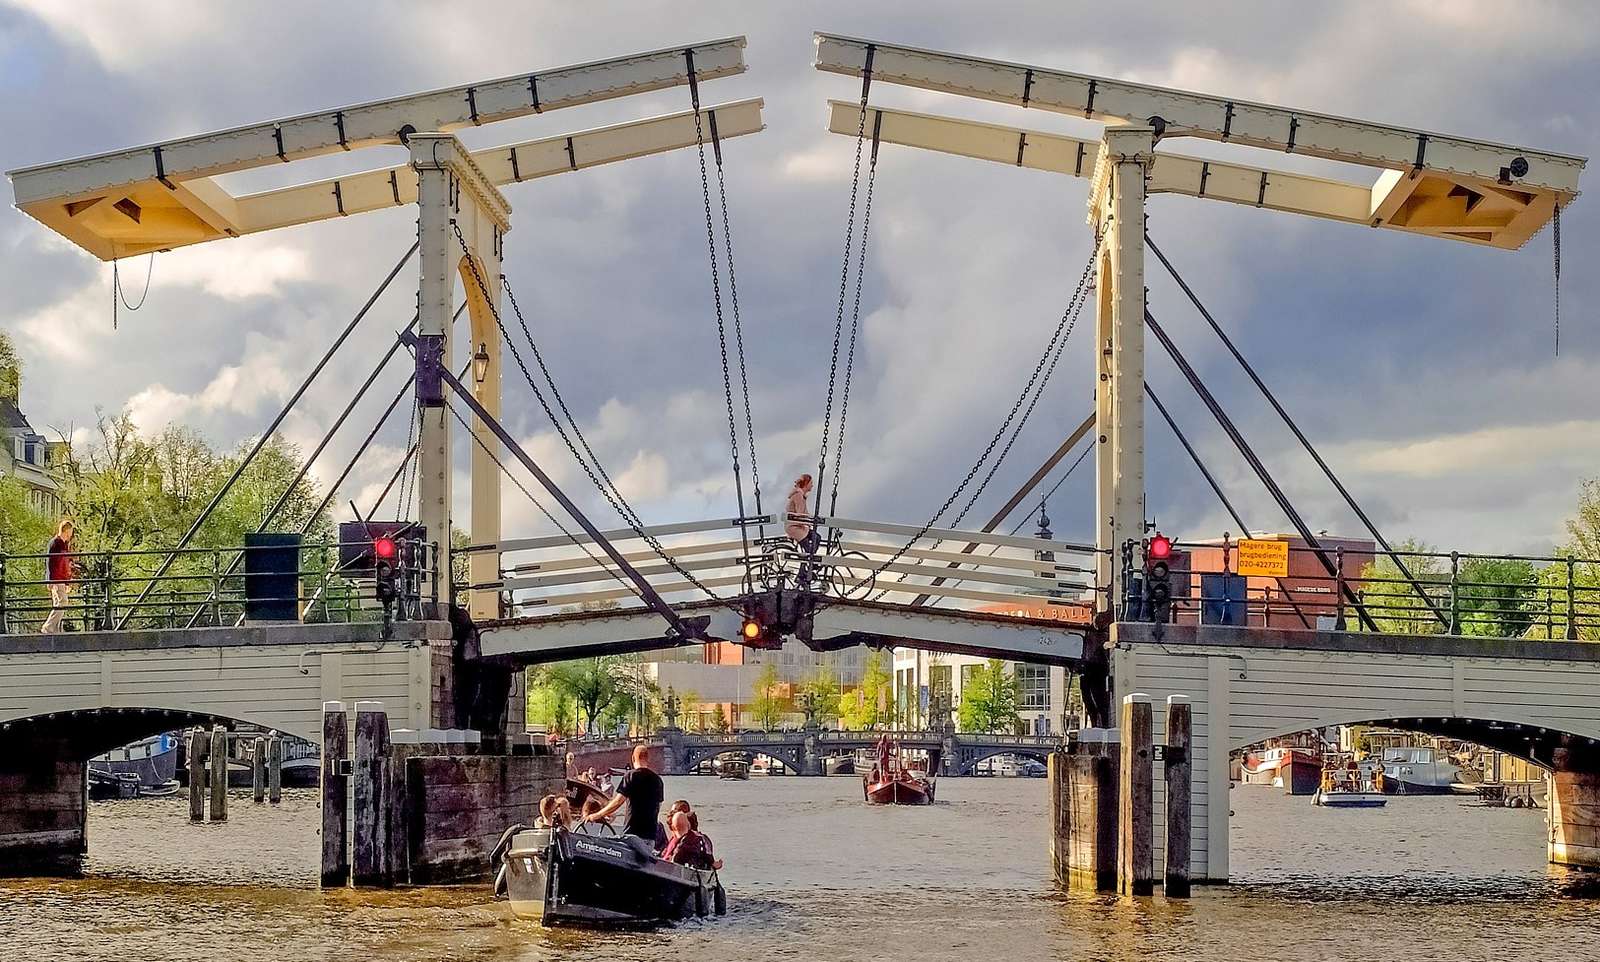 Magere Brug (Skinny Bridge) Amszterdamban online puzzle